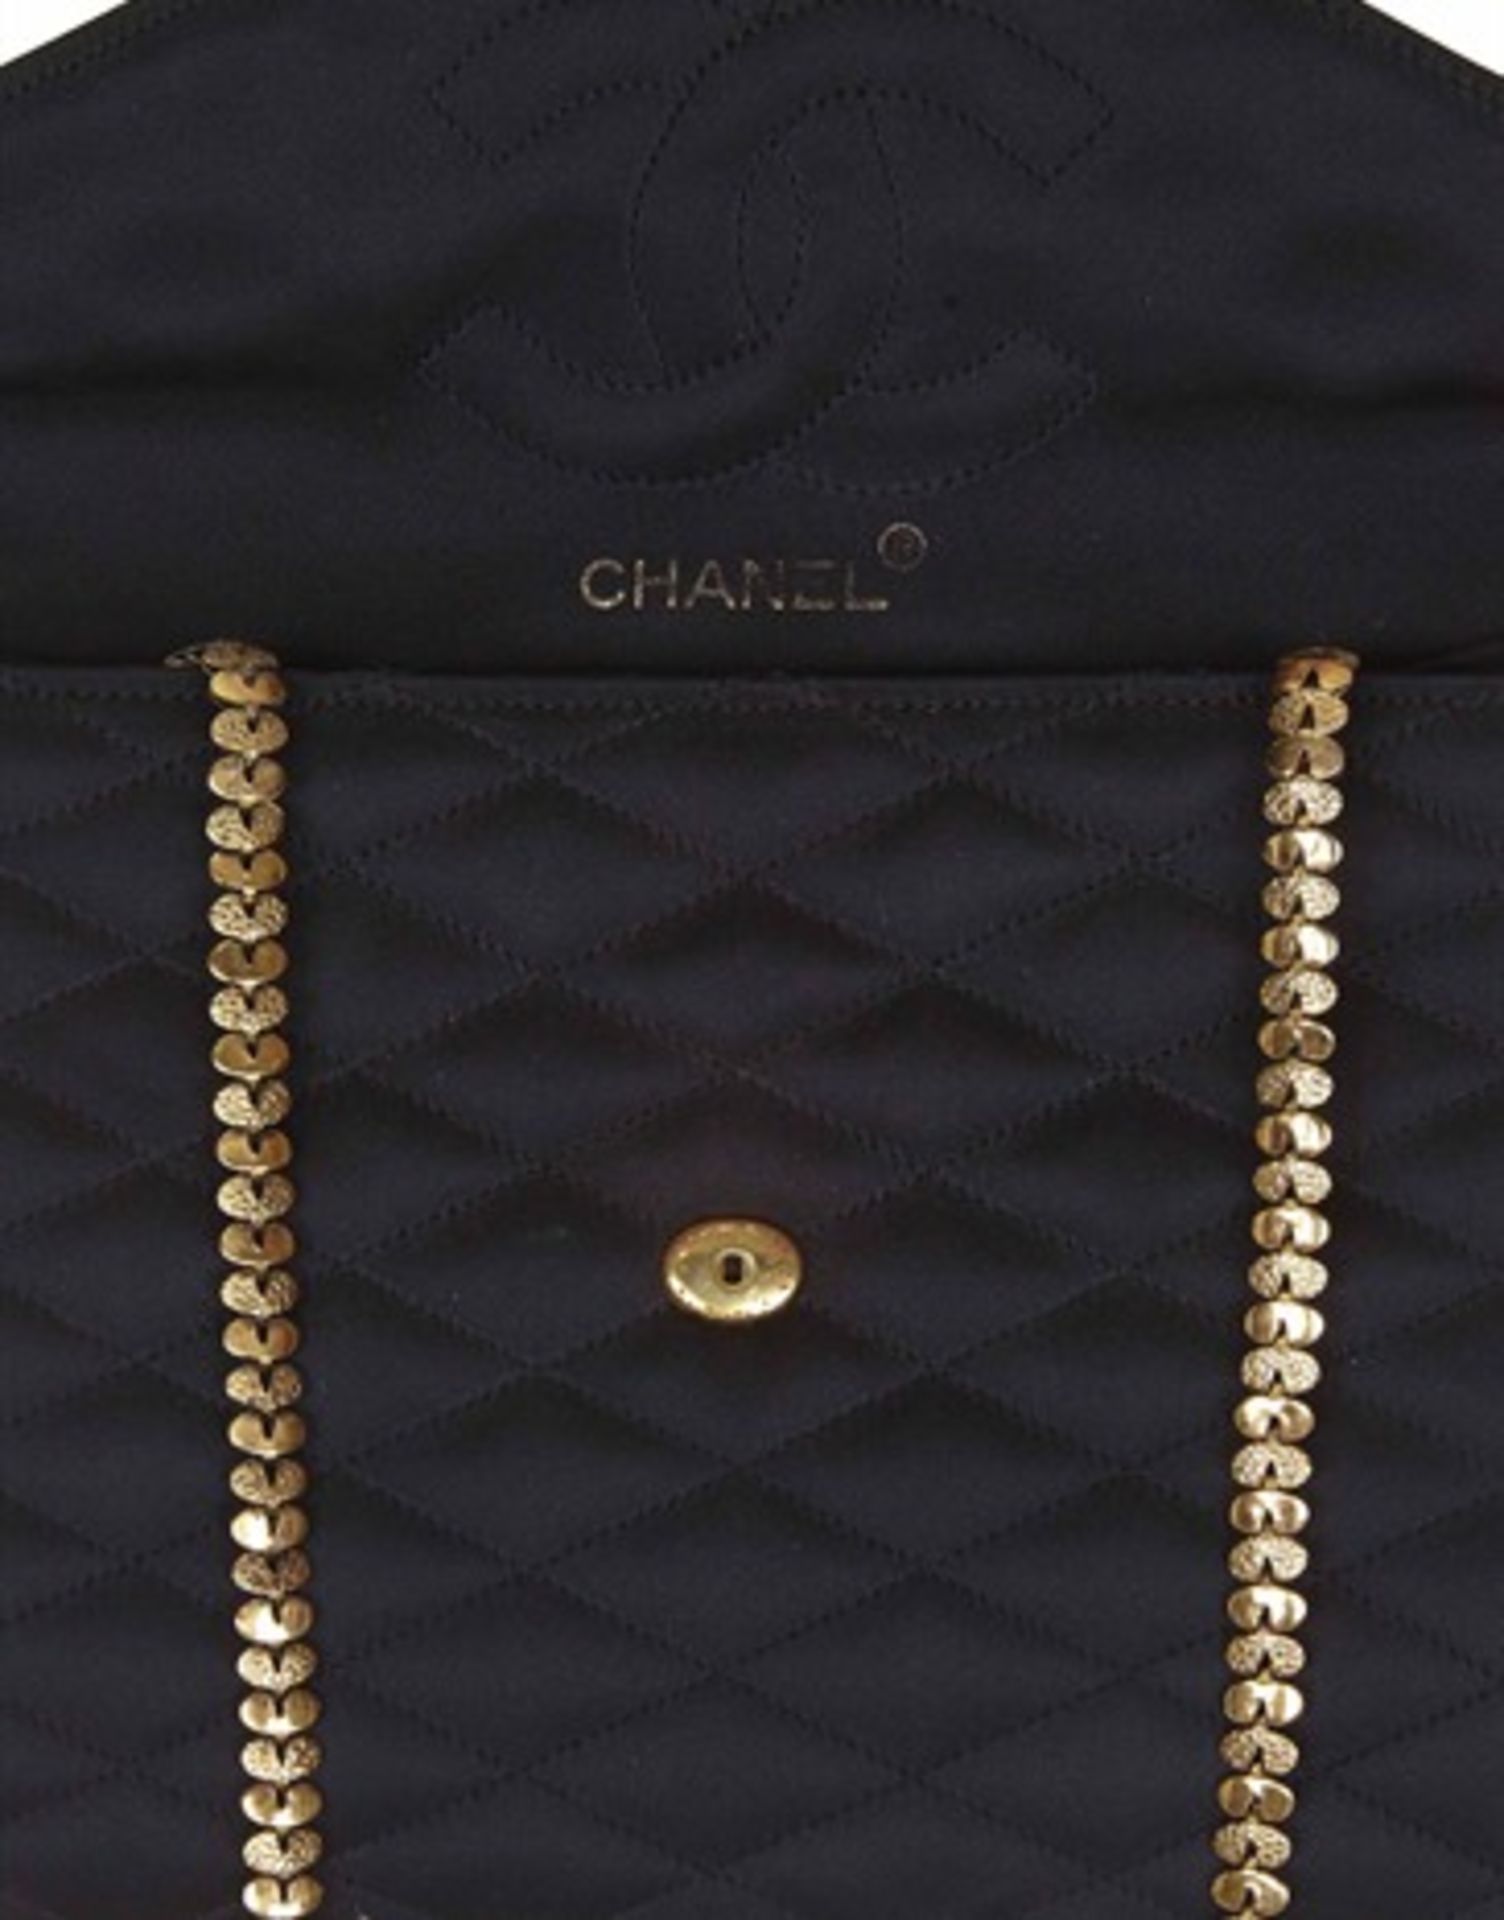 1980s Chanel Black Satin Bag - Image 4 of 5